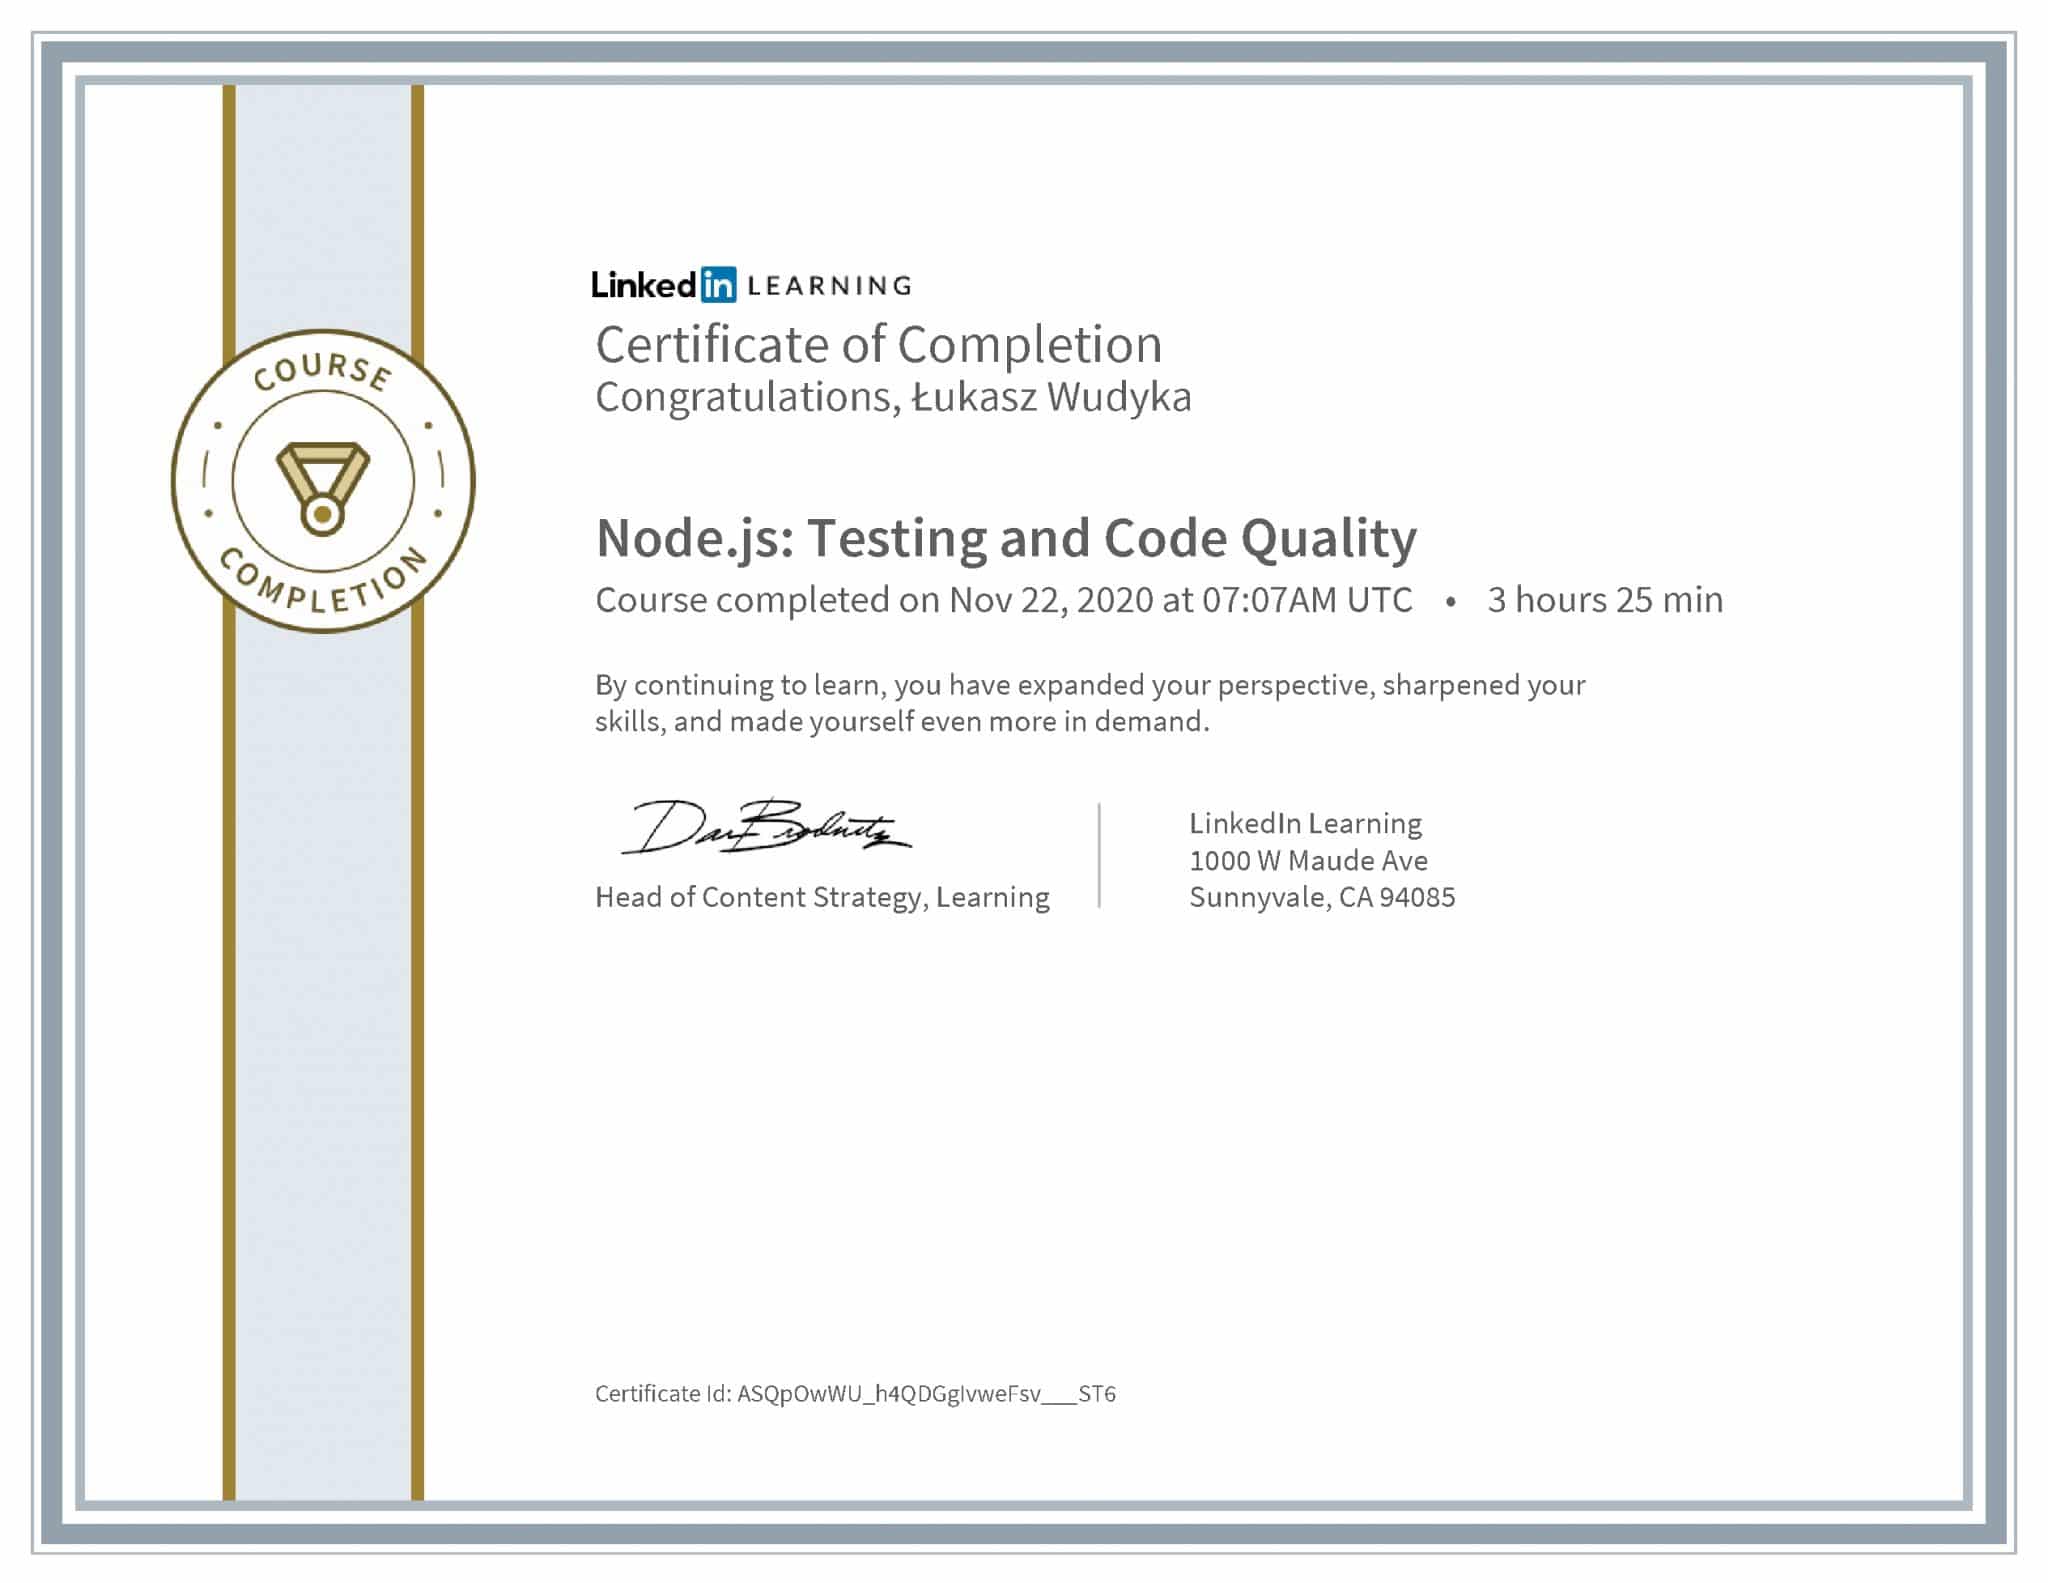 Łukasz Wudyka certyfikat LinkedIn Node.js: Testing and Code Quality